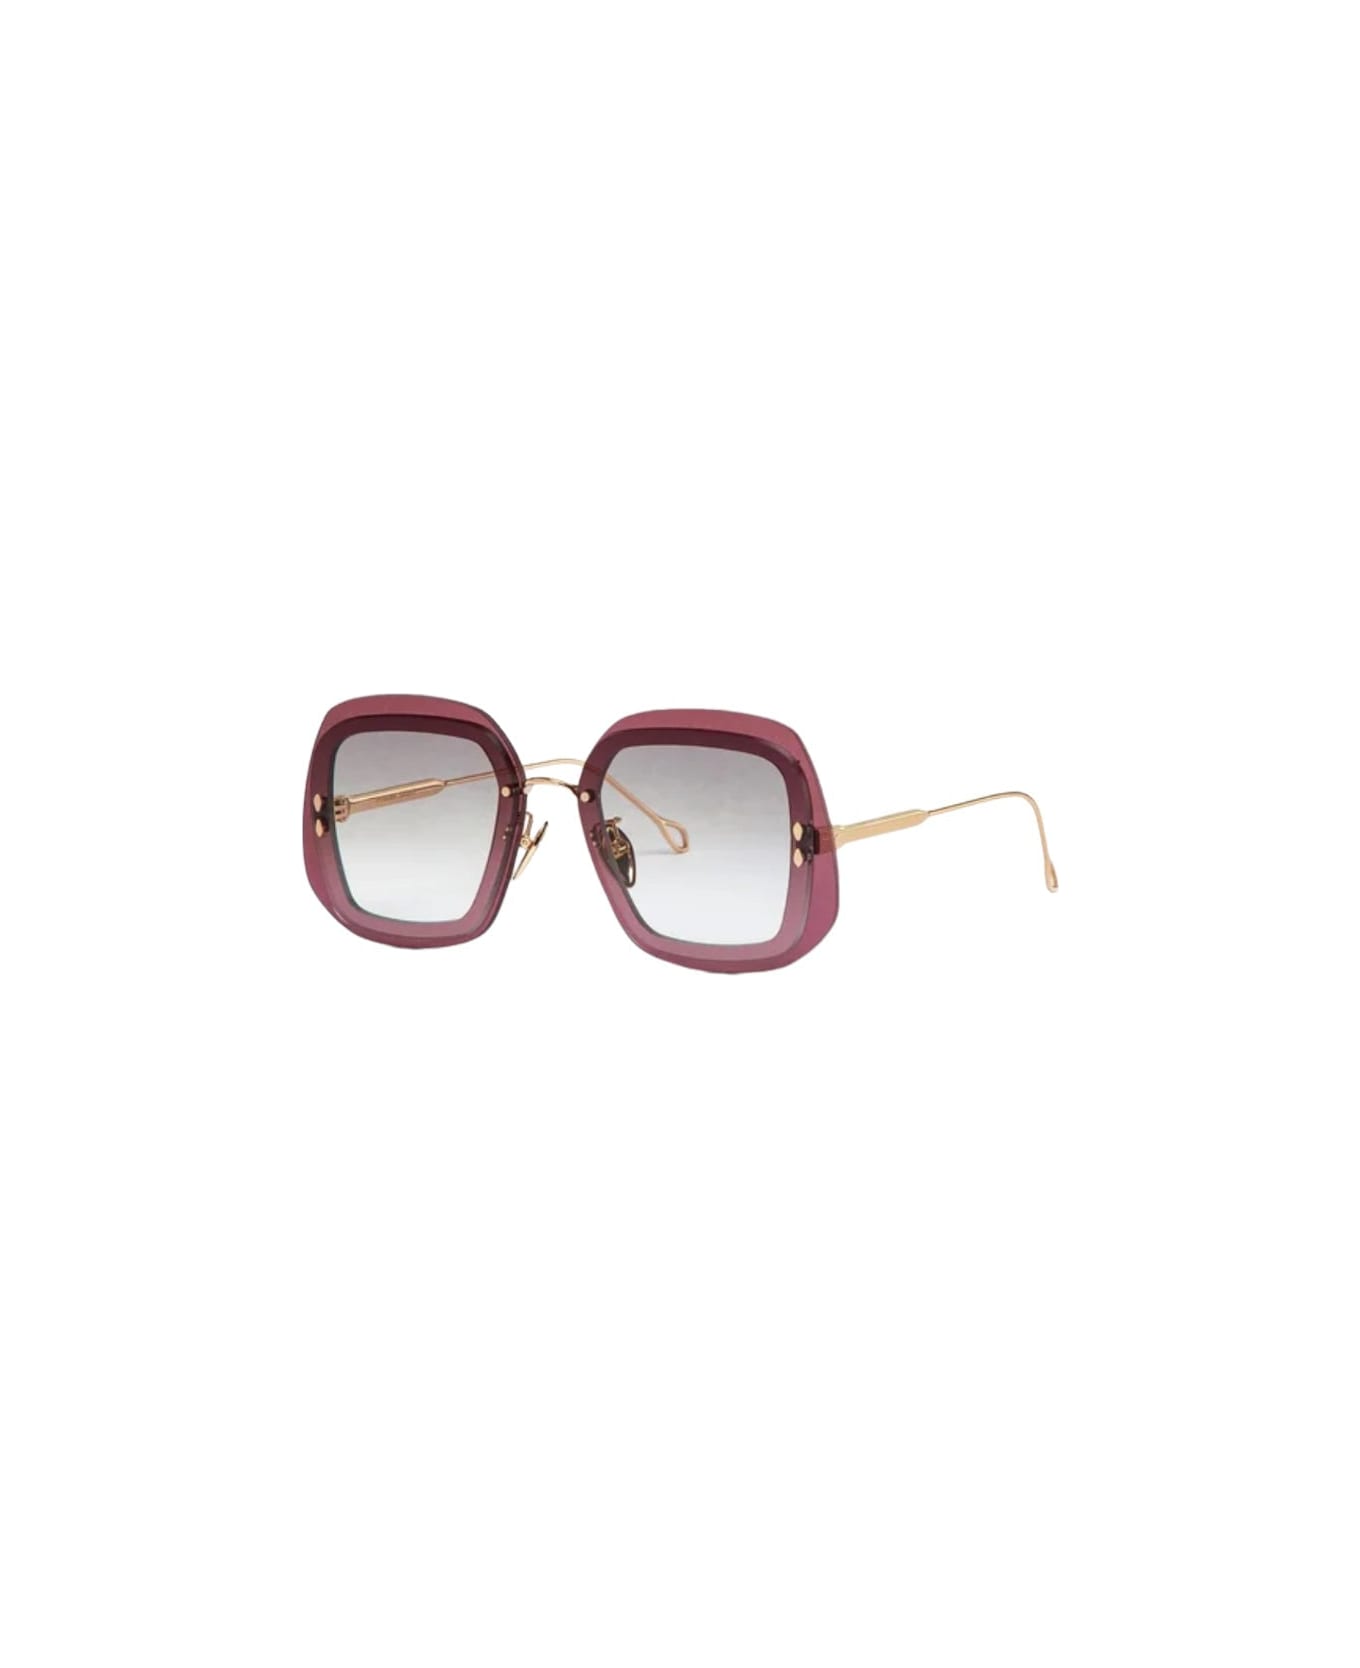 Im 0047 - Burgundy Sunglasses